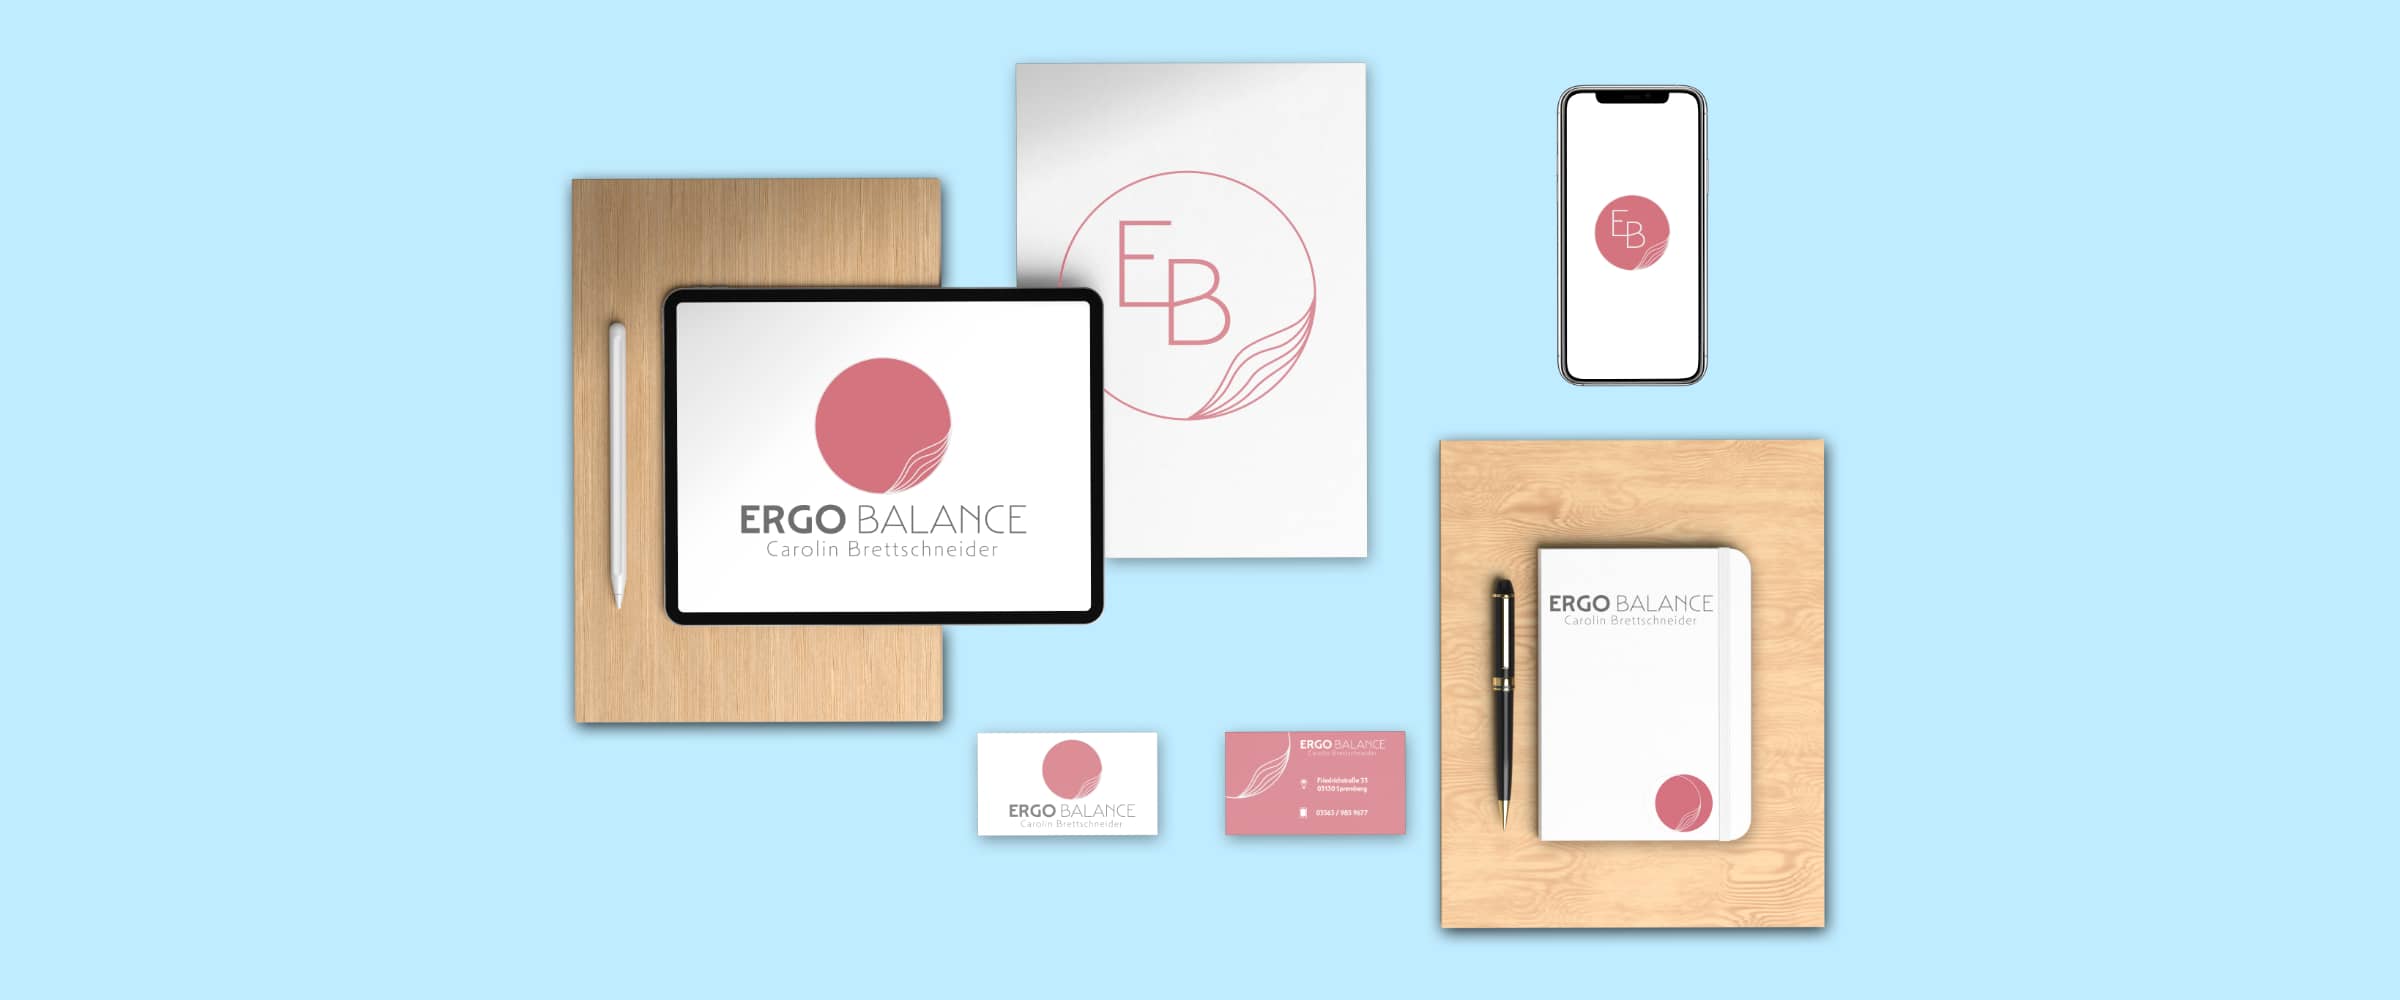 kiko kreativagentur - Projekt Ergo Balance